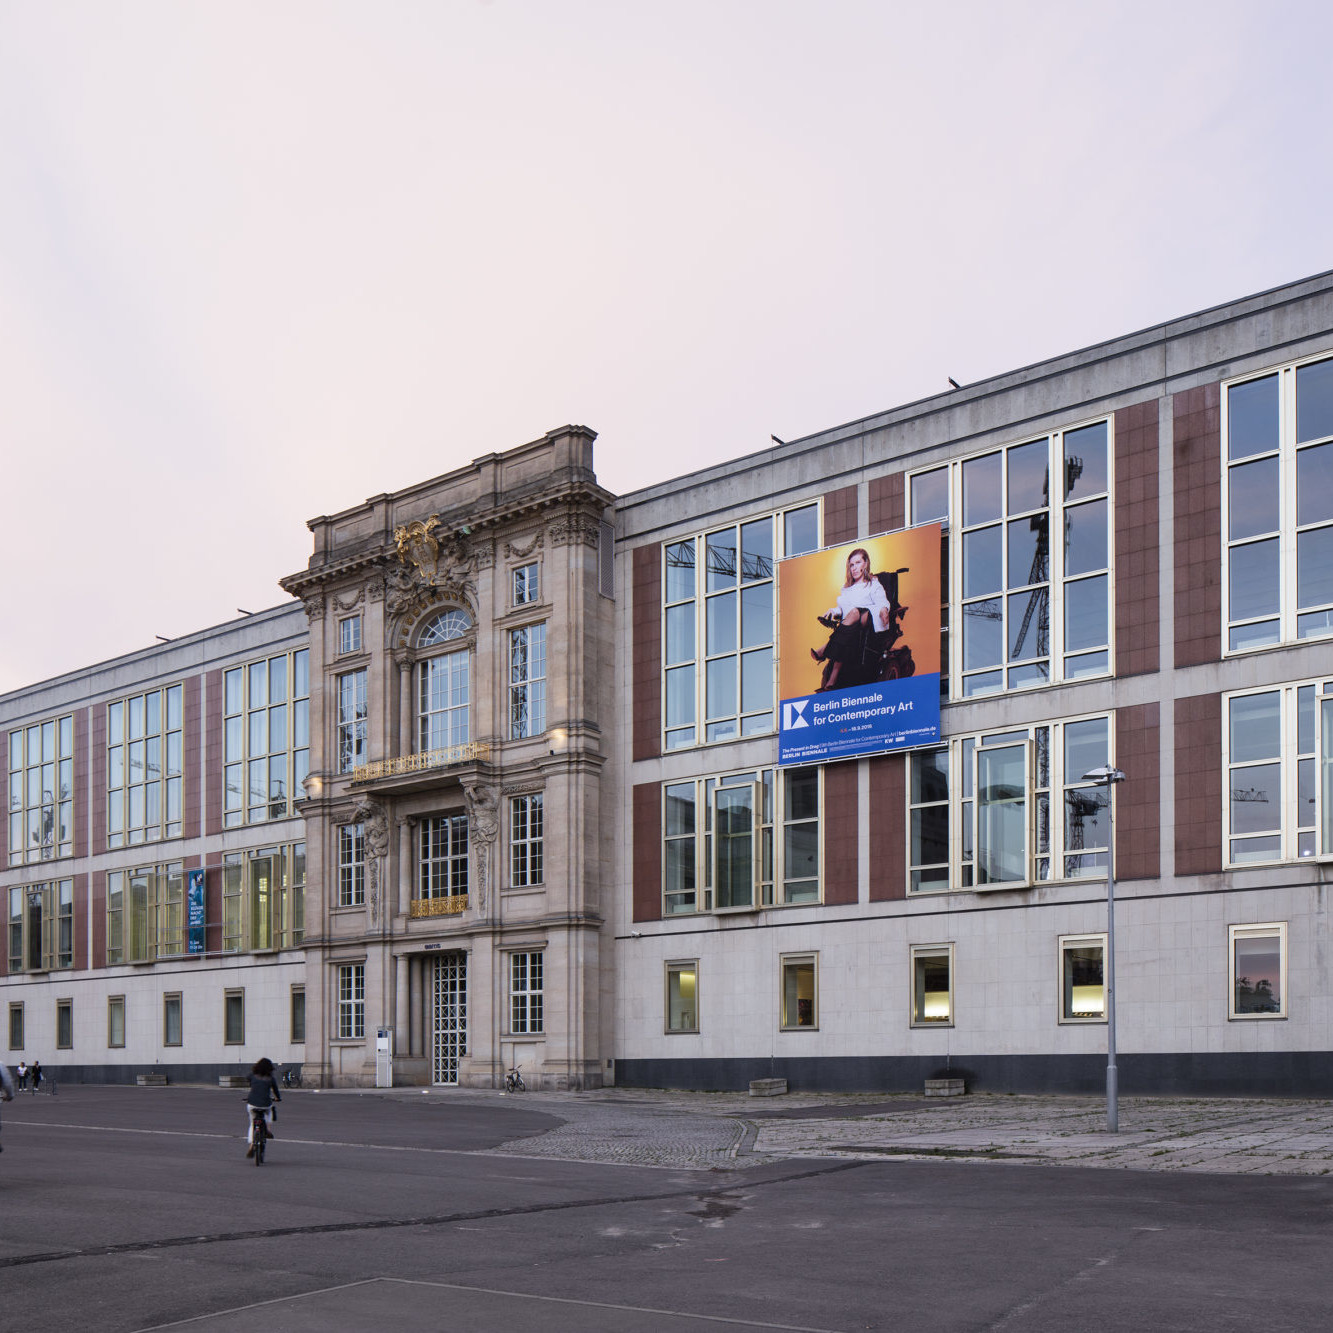 Façade of ESMT European School of Management and Technology